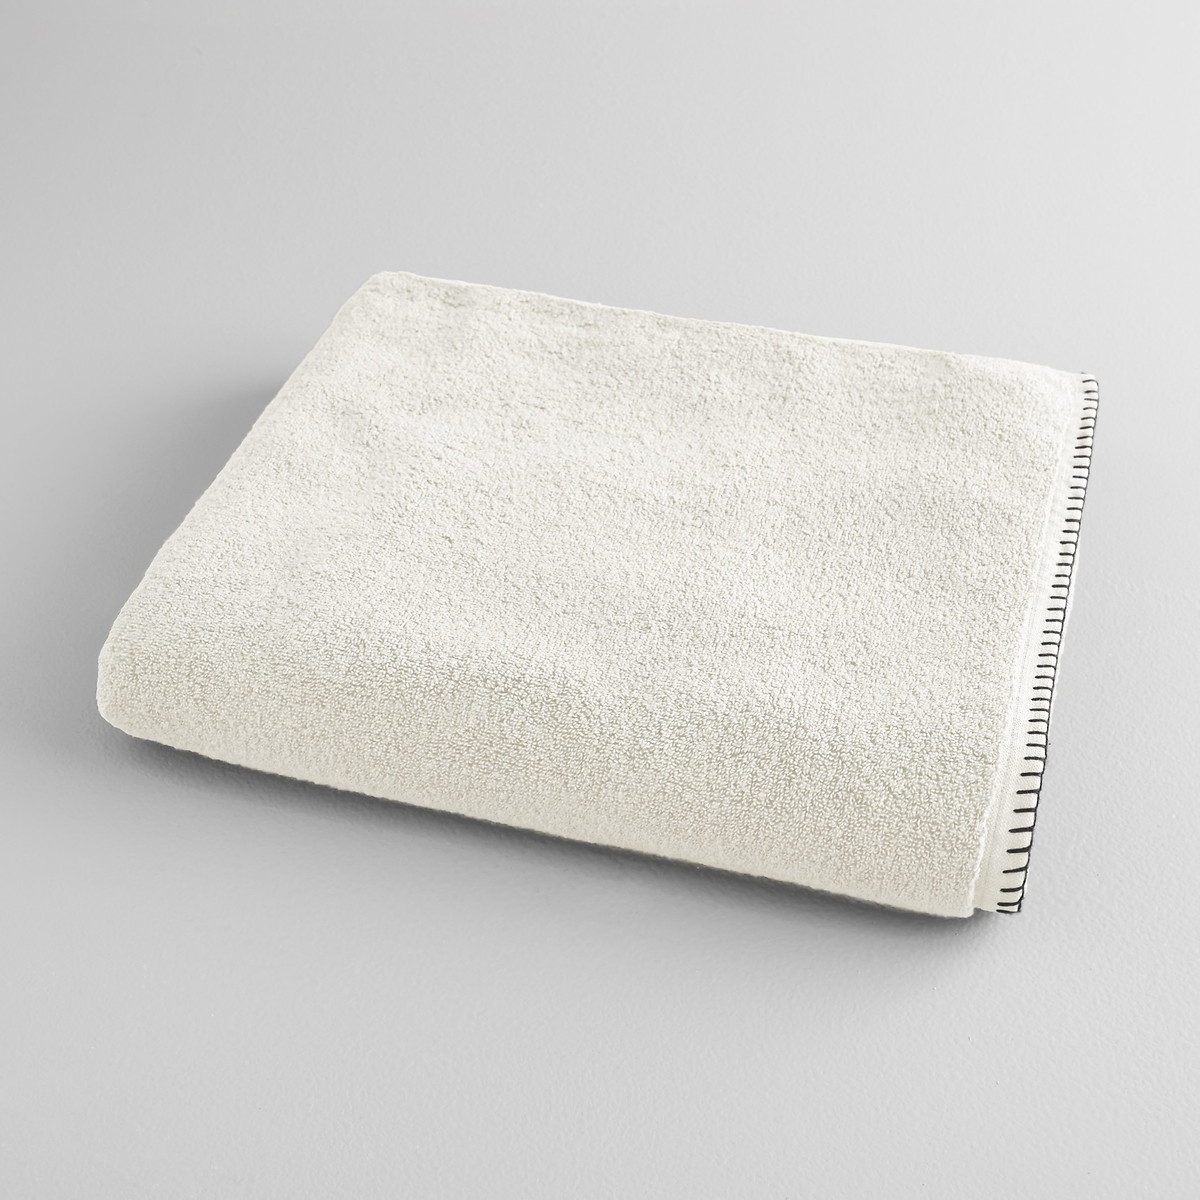 Банное полотенце Kyla 70 x 140 см белый банное полотенце kyla 70 x 140 см серый